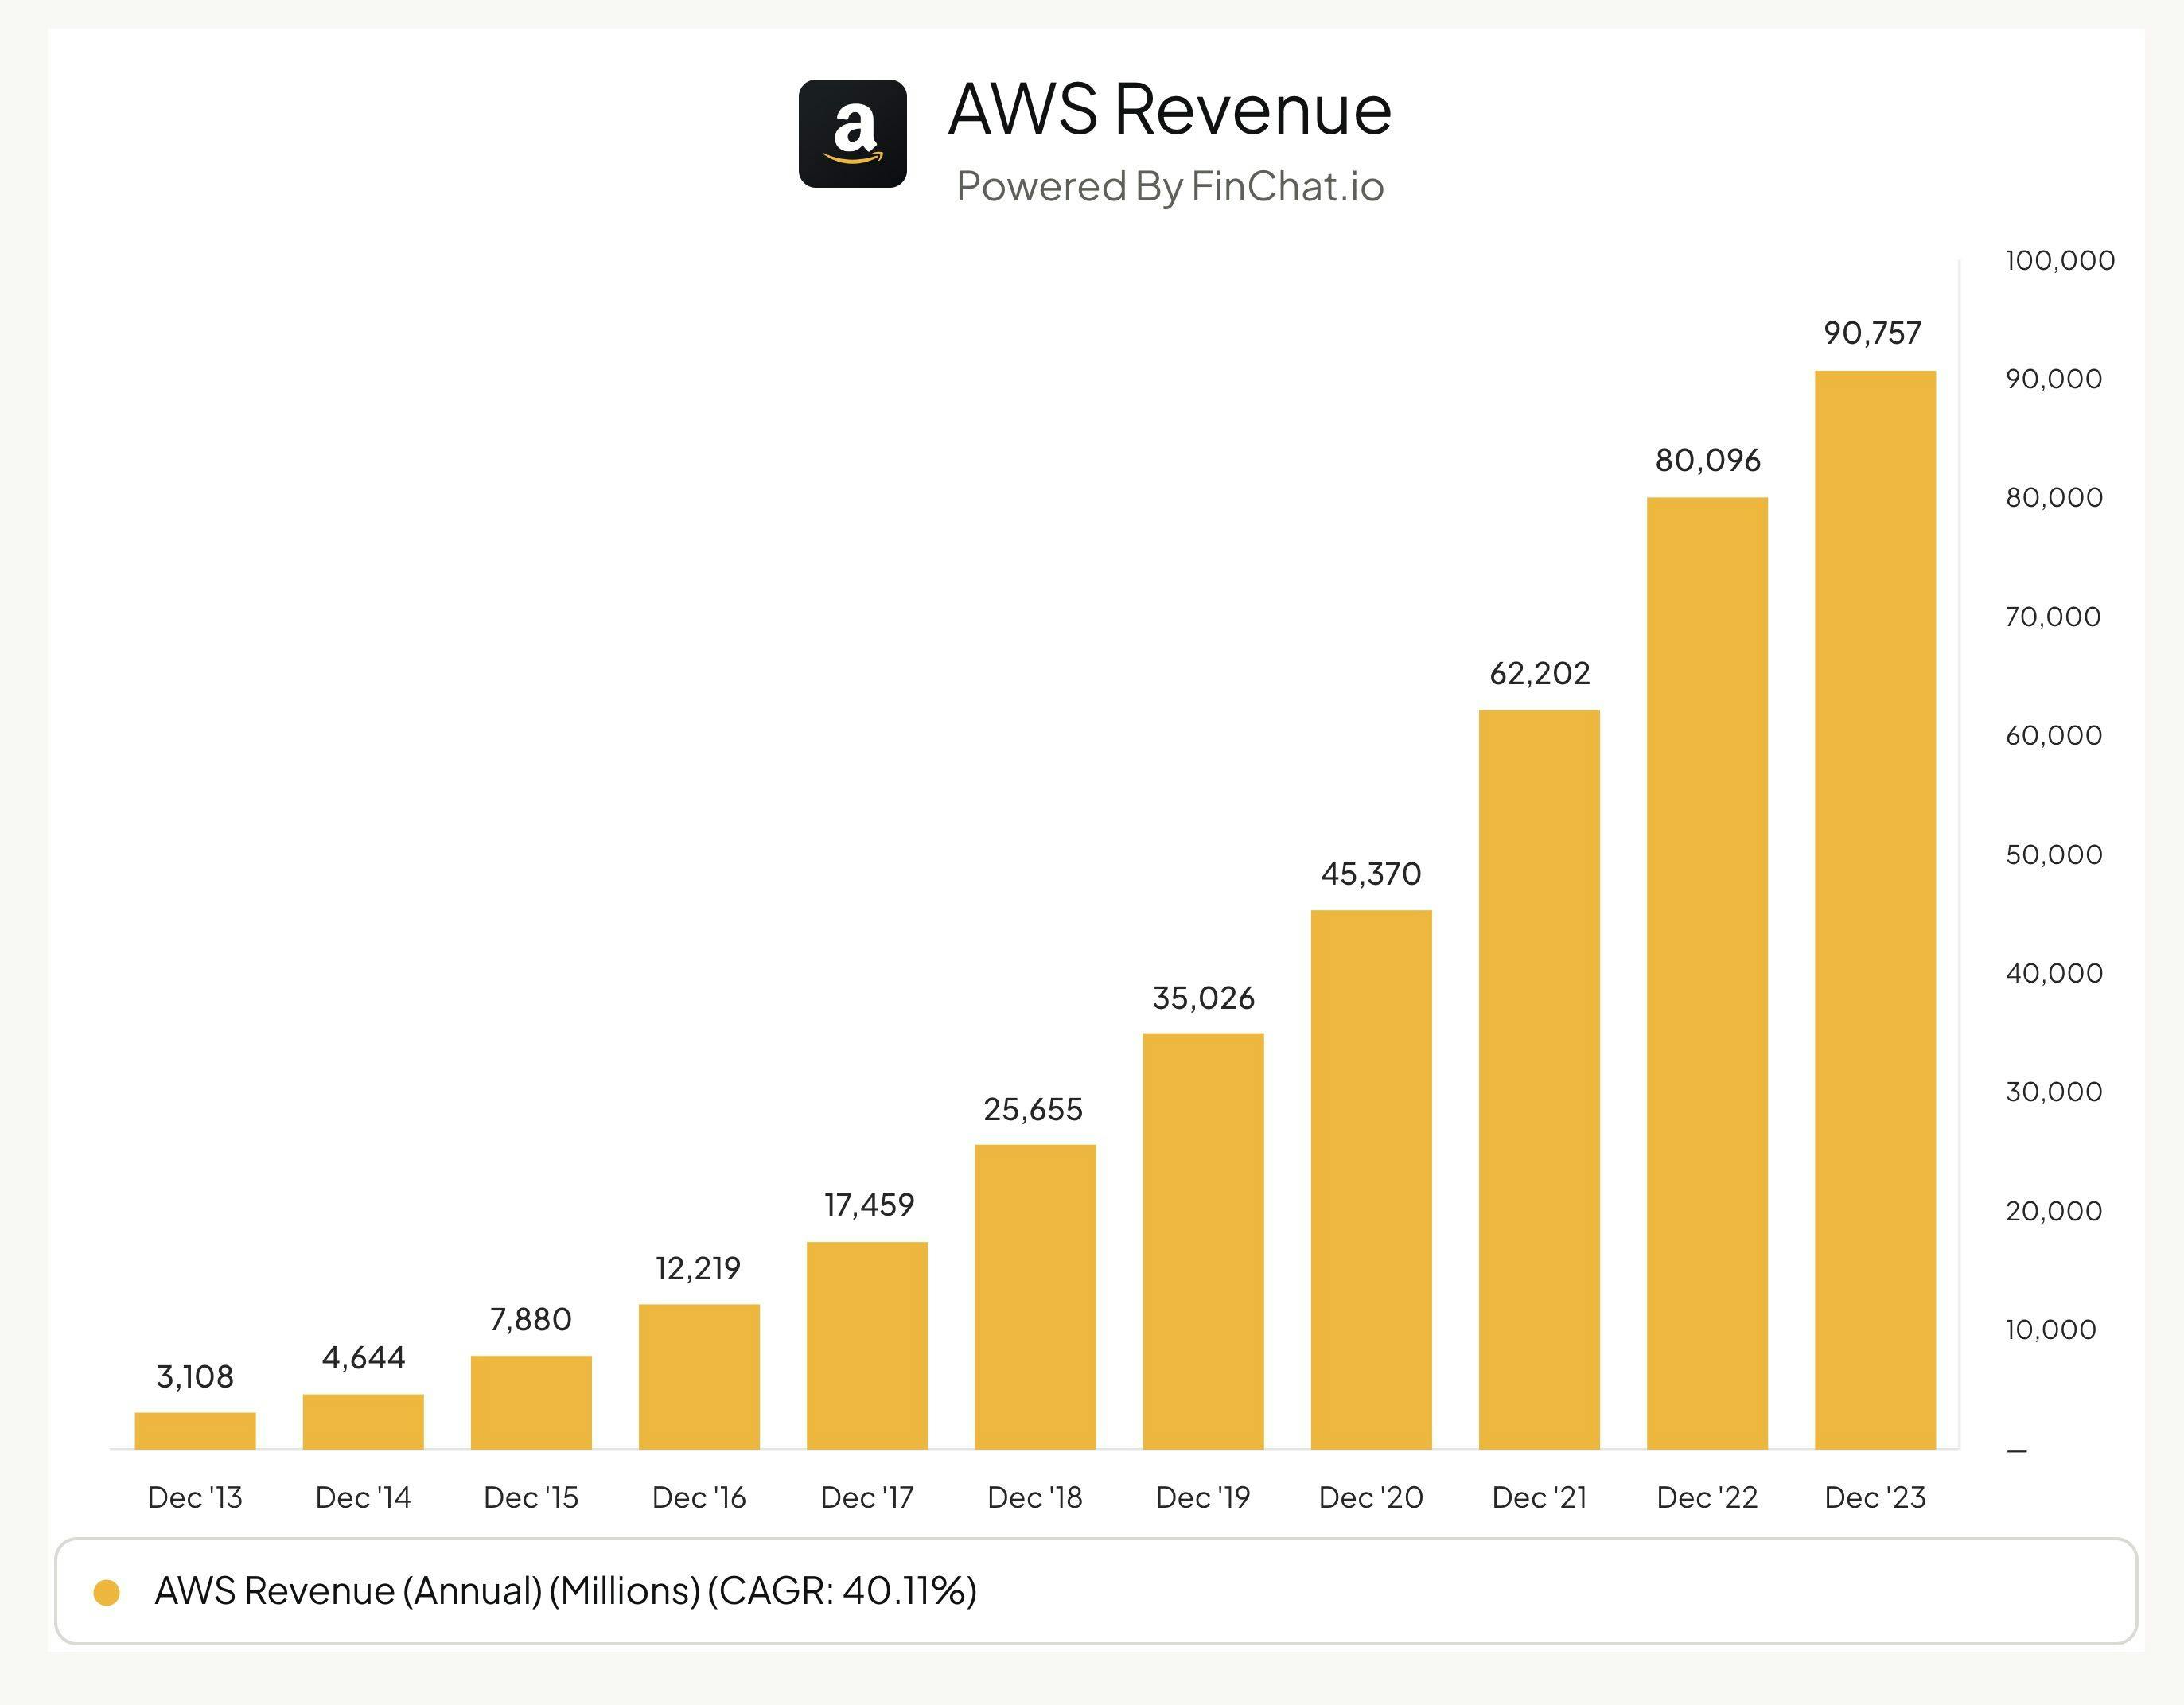 AWS Revenue over last 10 years